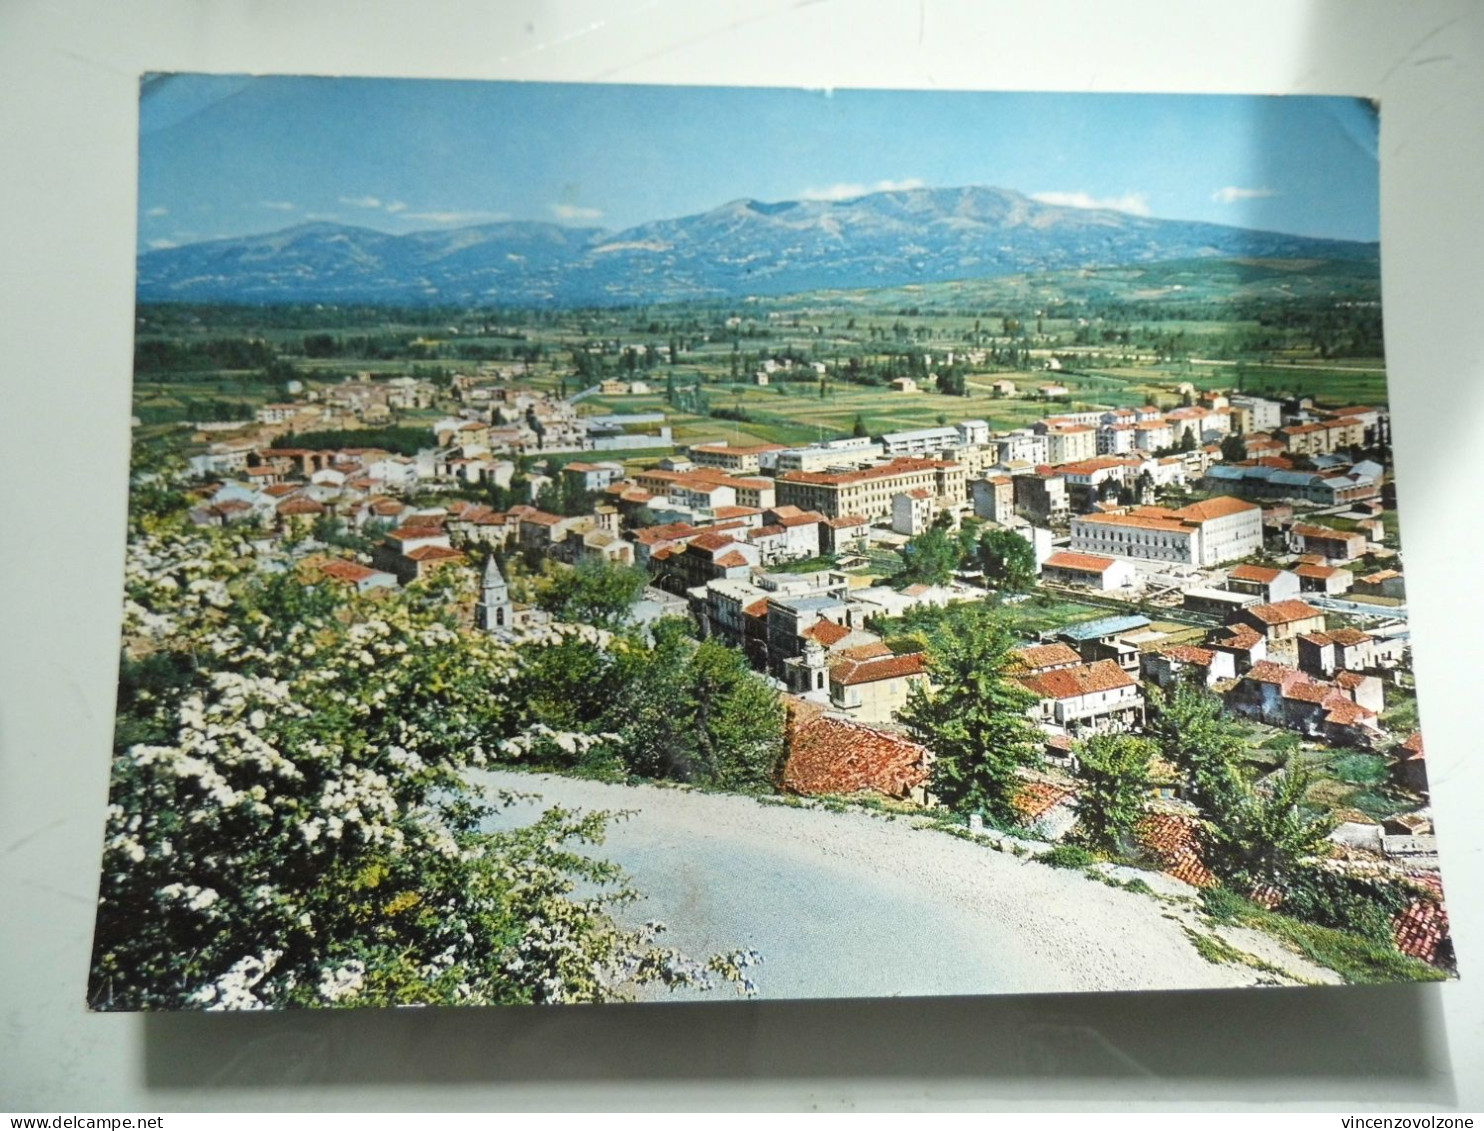 Cartolina Viaggiata "BOIANO Panorama" 1970 - Campobasso